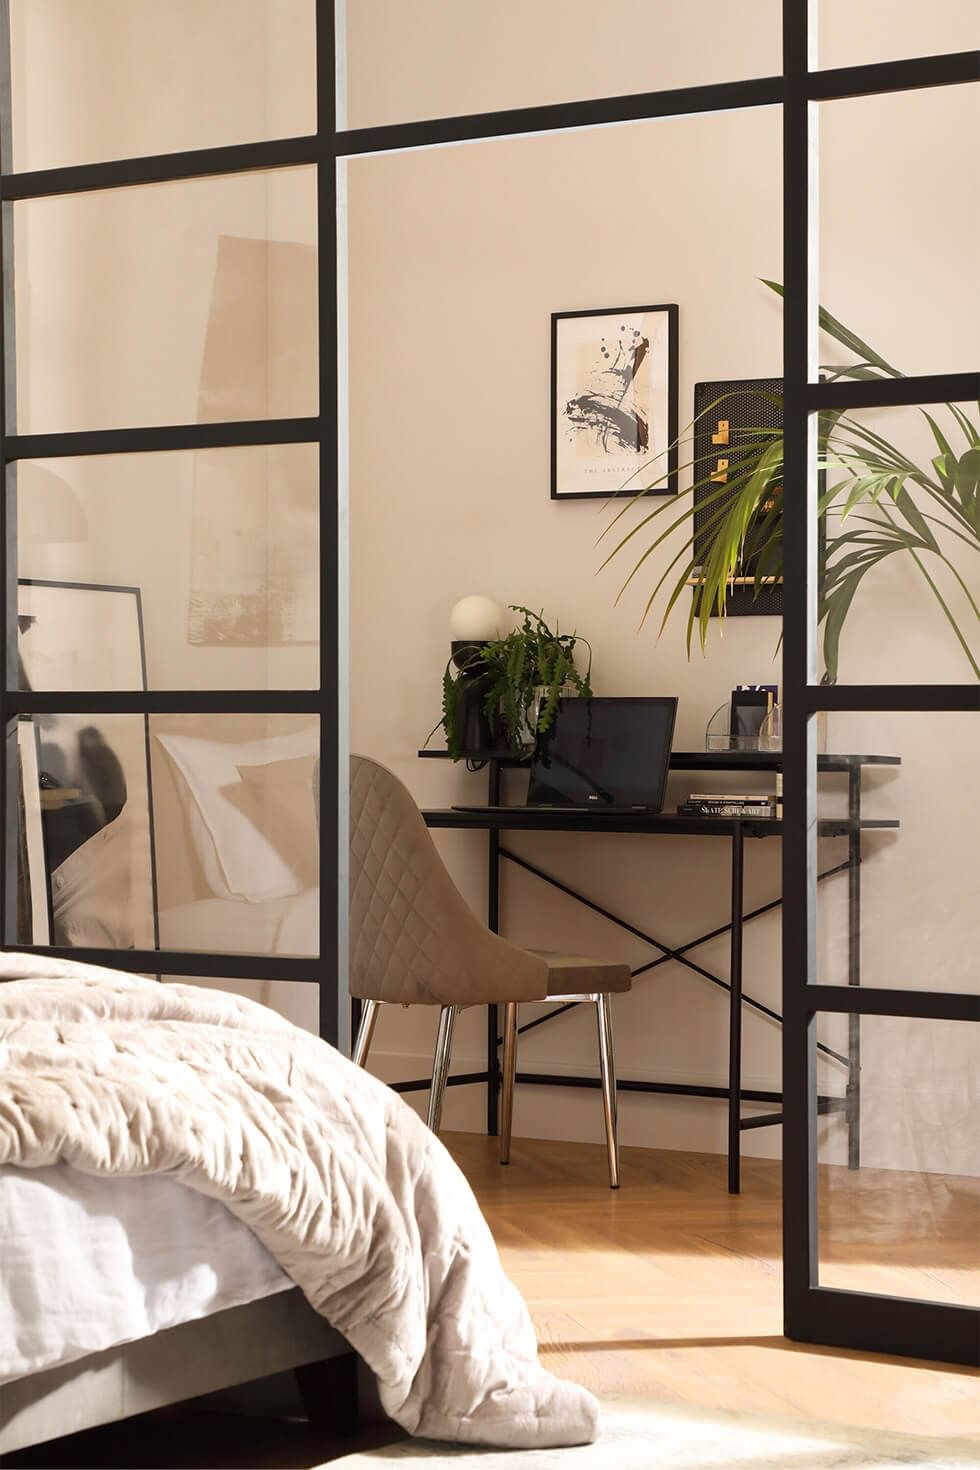 Room divider between bedroom and workspace